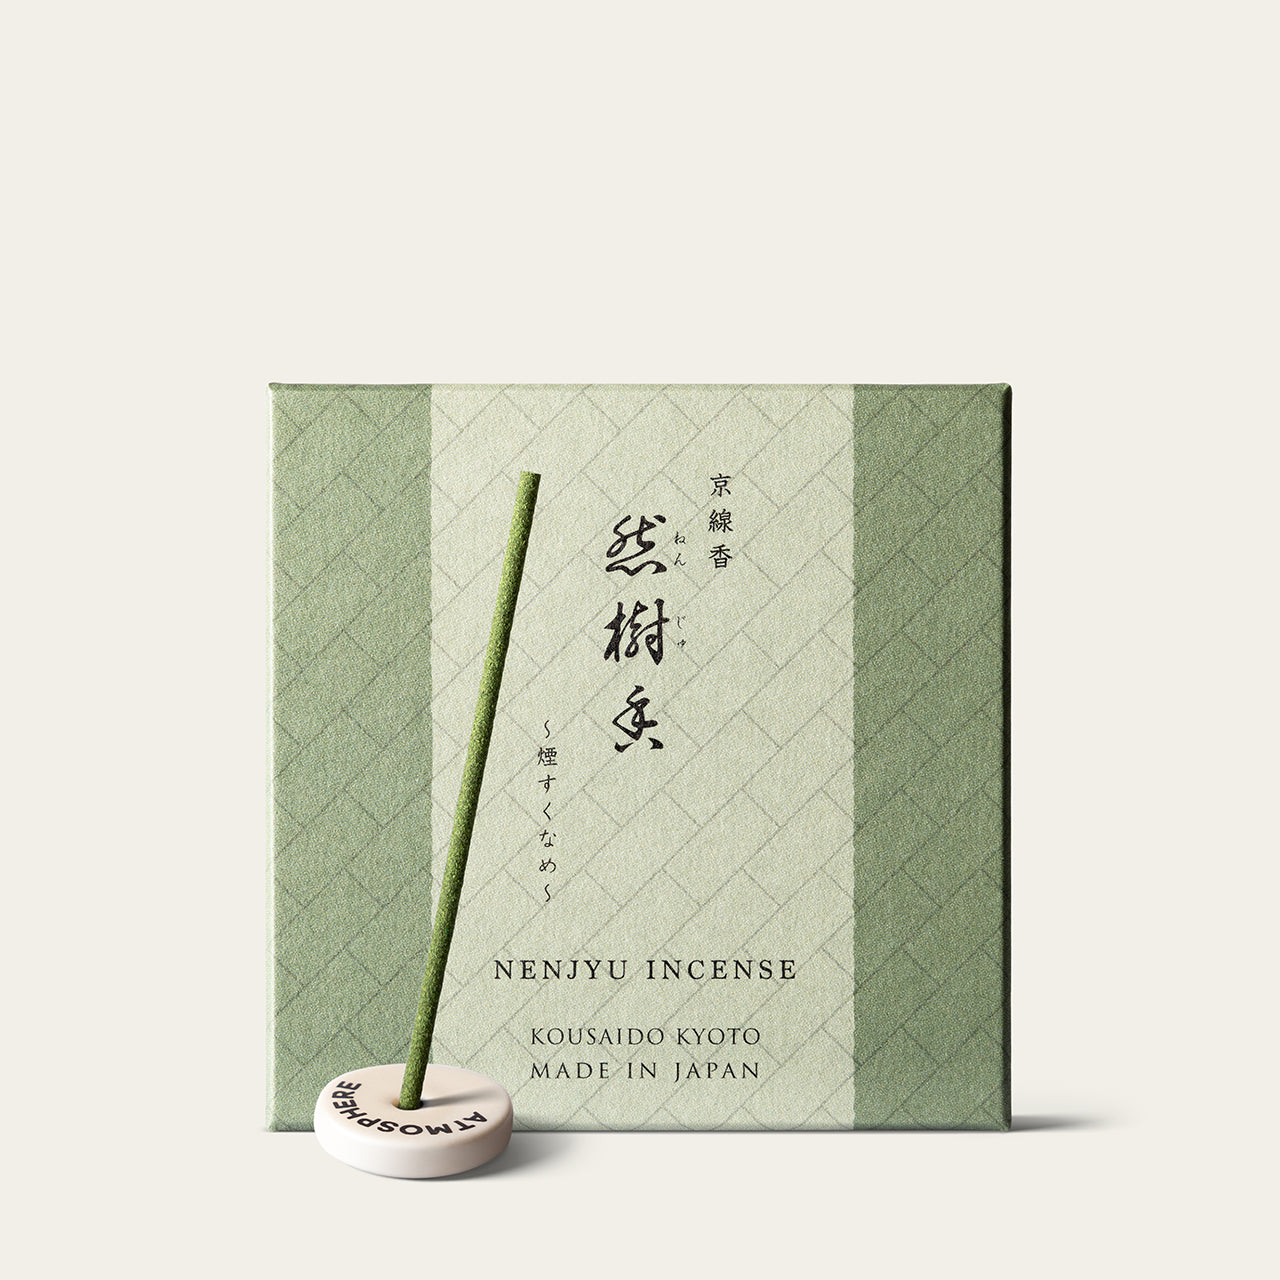 Kousaido Scent of Kyoto Fragrant Tree Nenjyu Japanese incense sticks (200 sticks) with Atmosphere ceramic incense holder